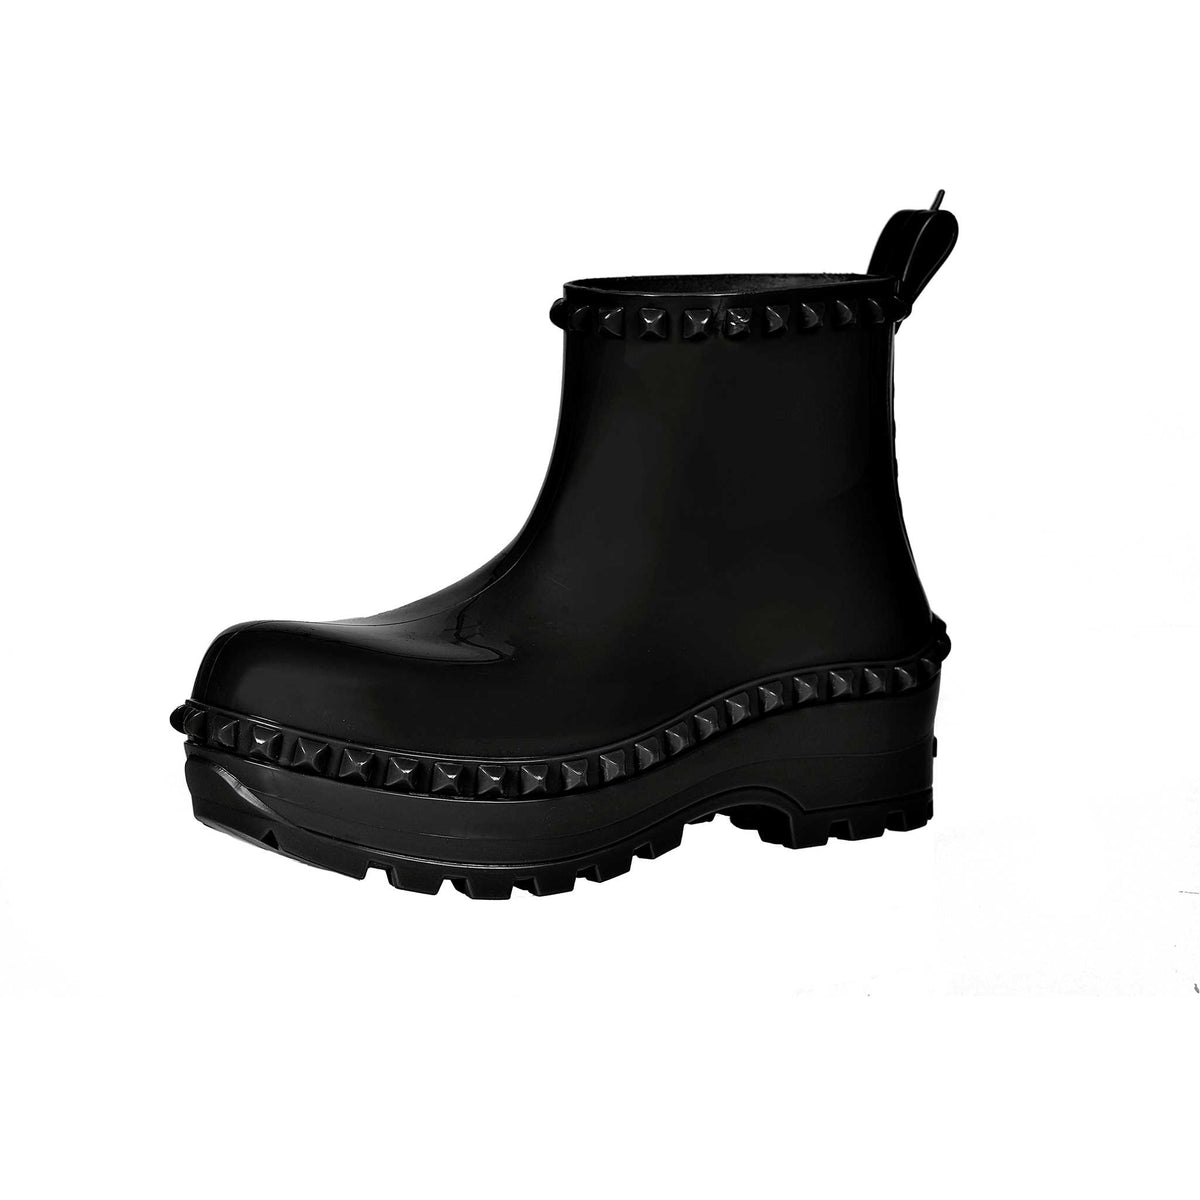 Carmen Sol jelly Bottega puddle boots in color black